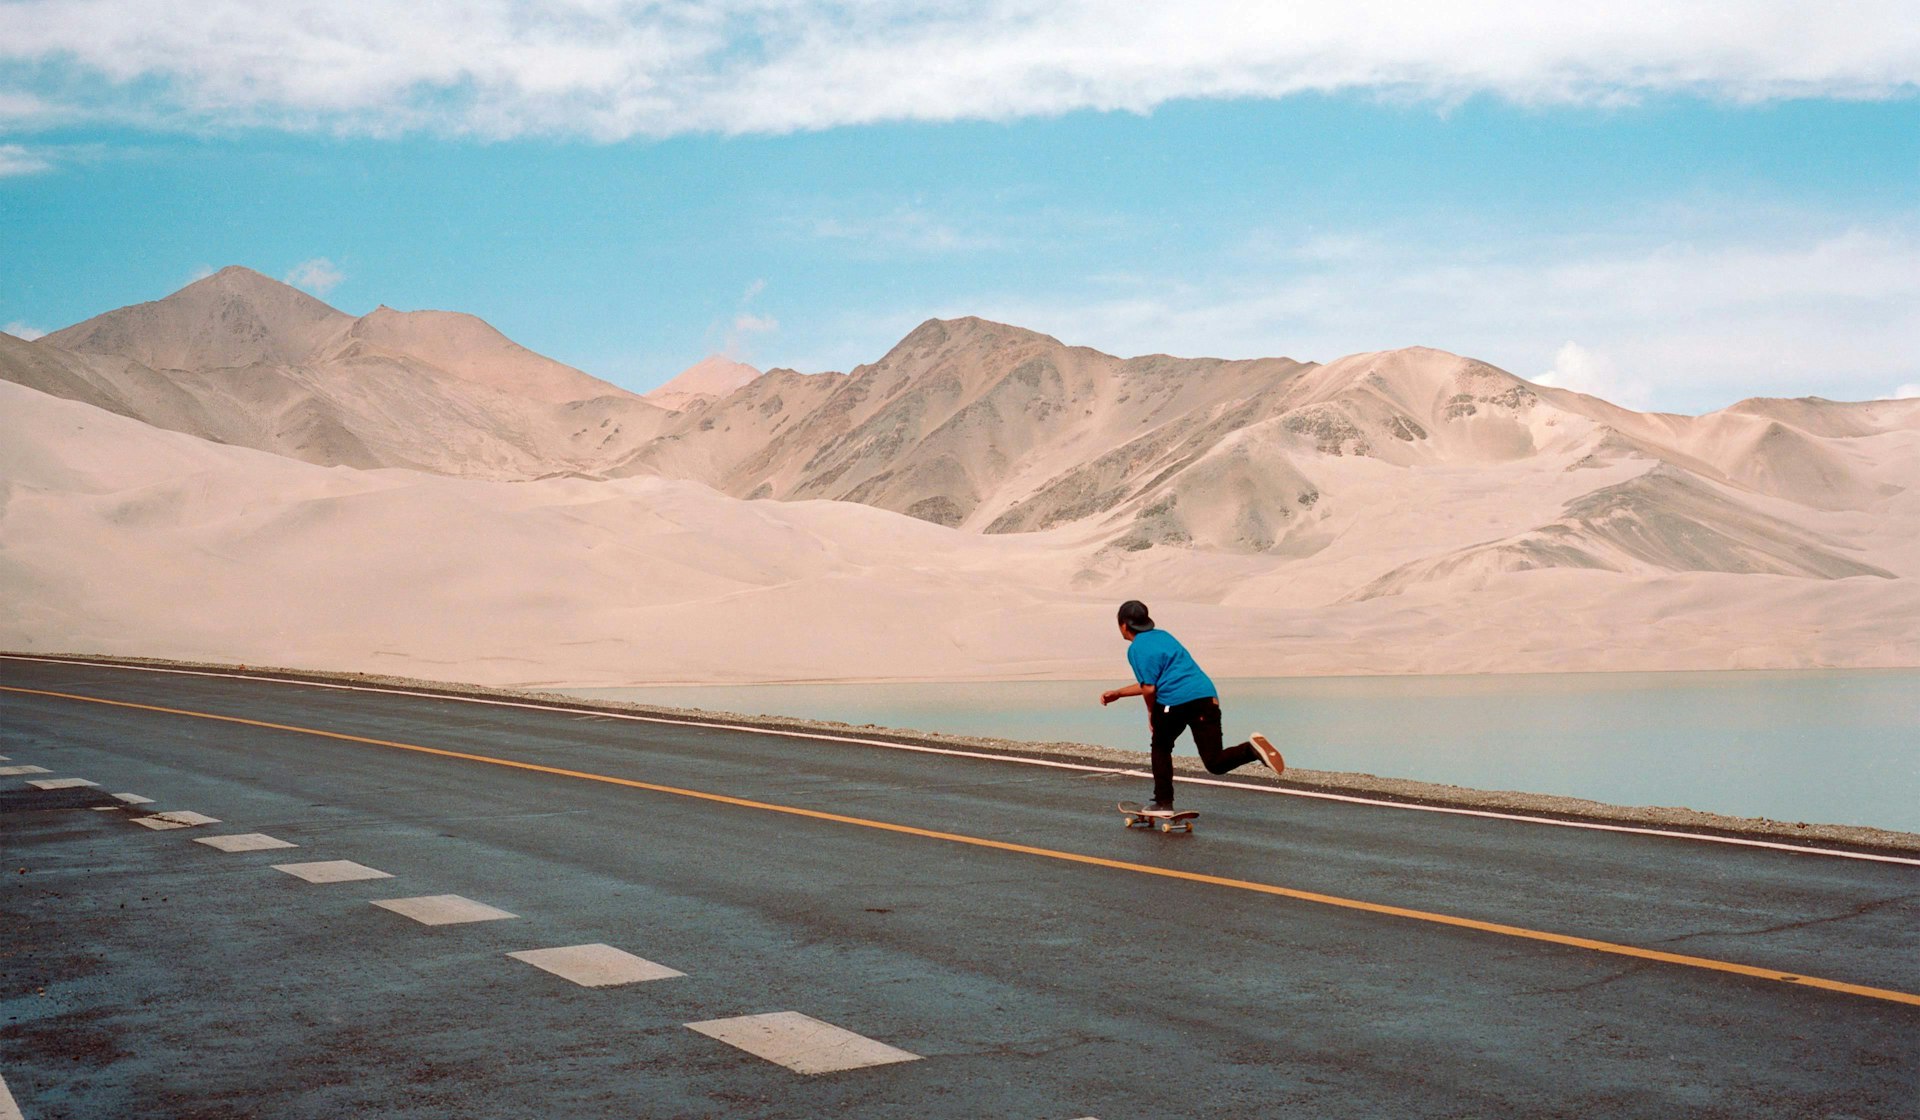 Skateboarding through China’s Wild West